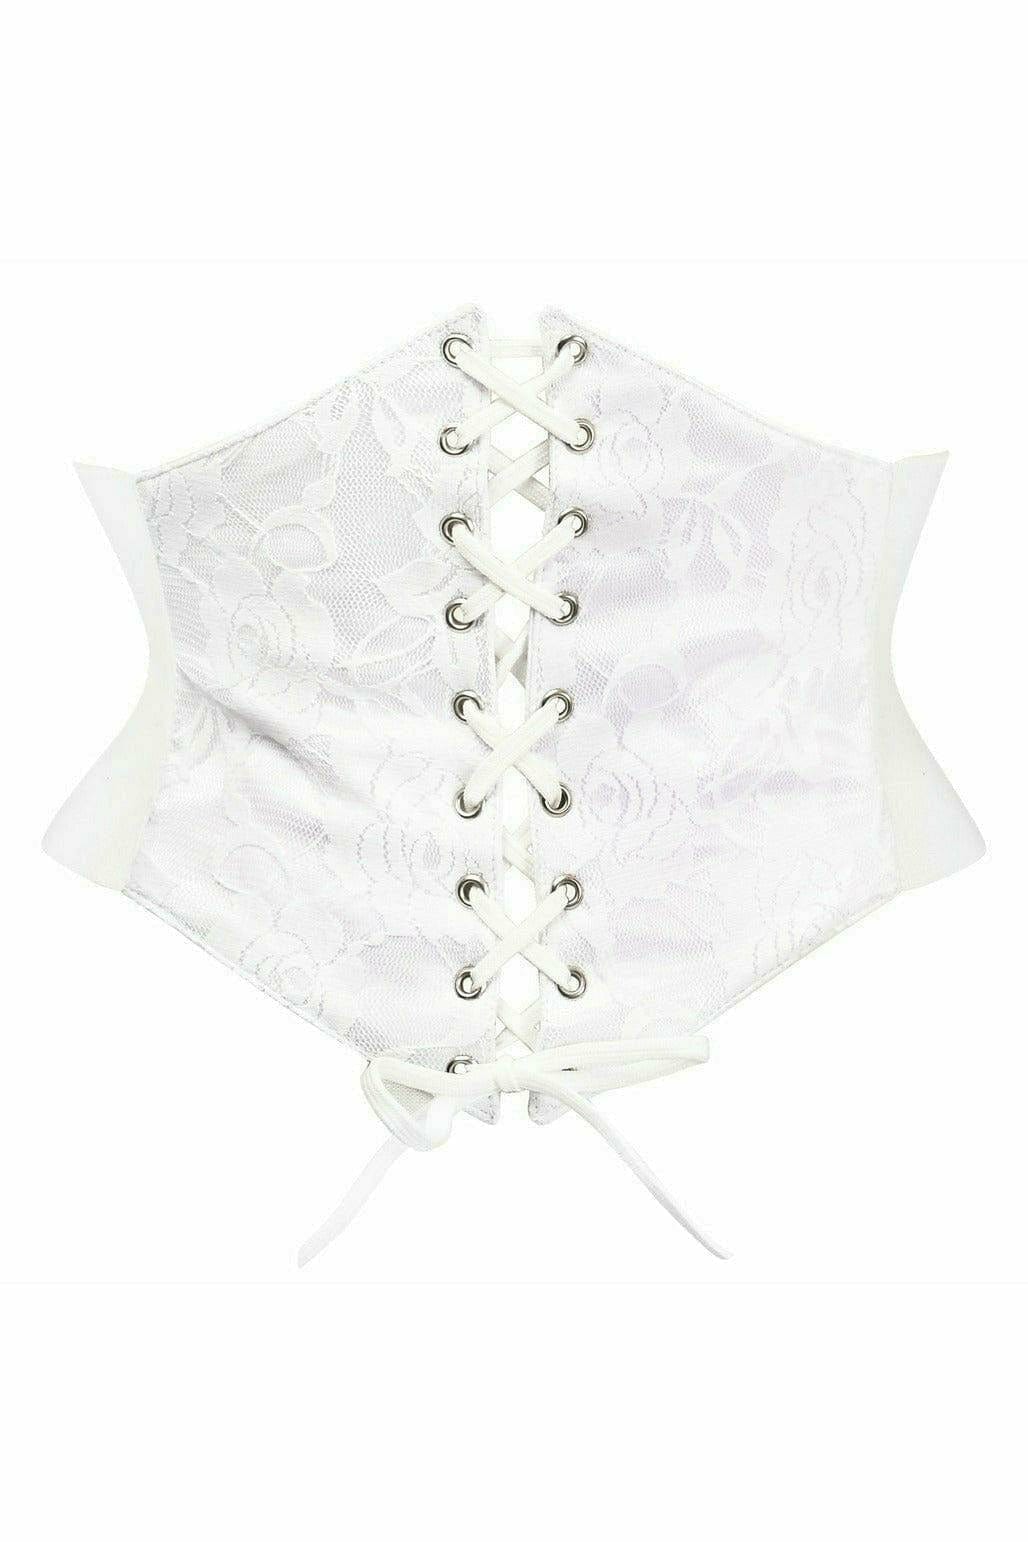 Sexy White Lace Corset Belt Cincher Musotica.com